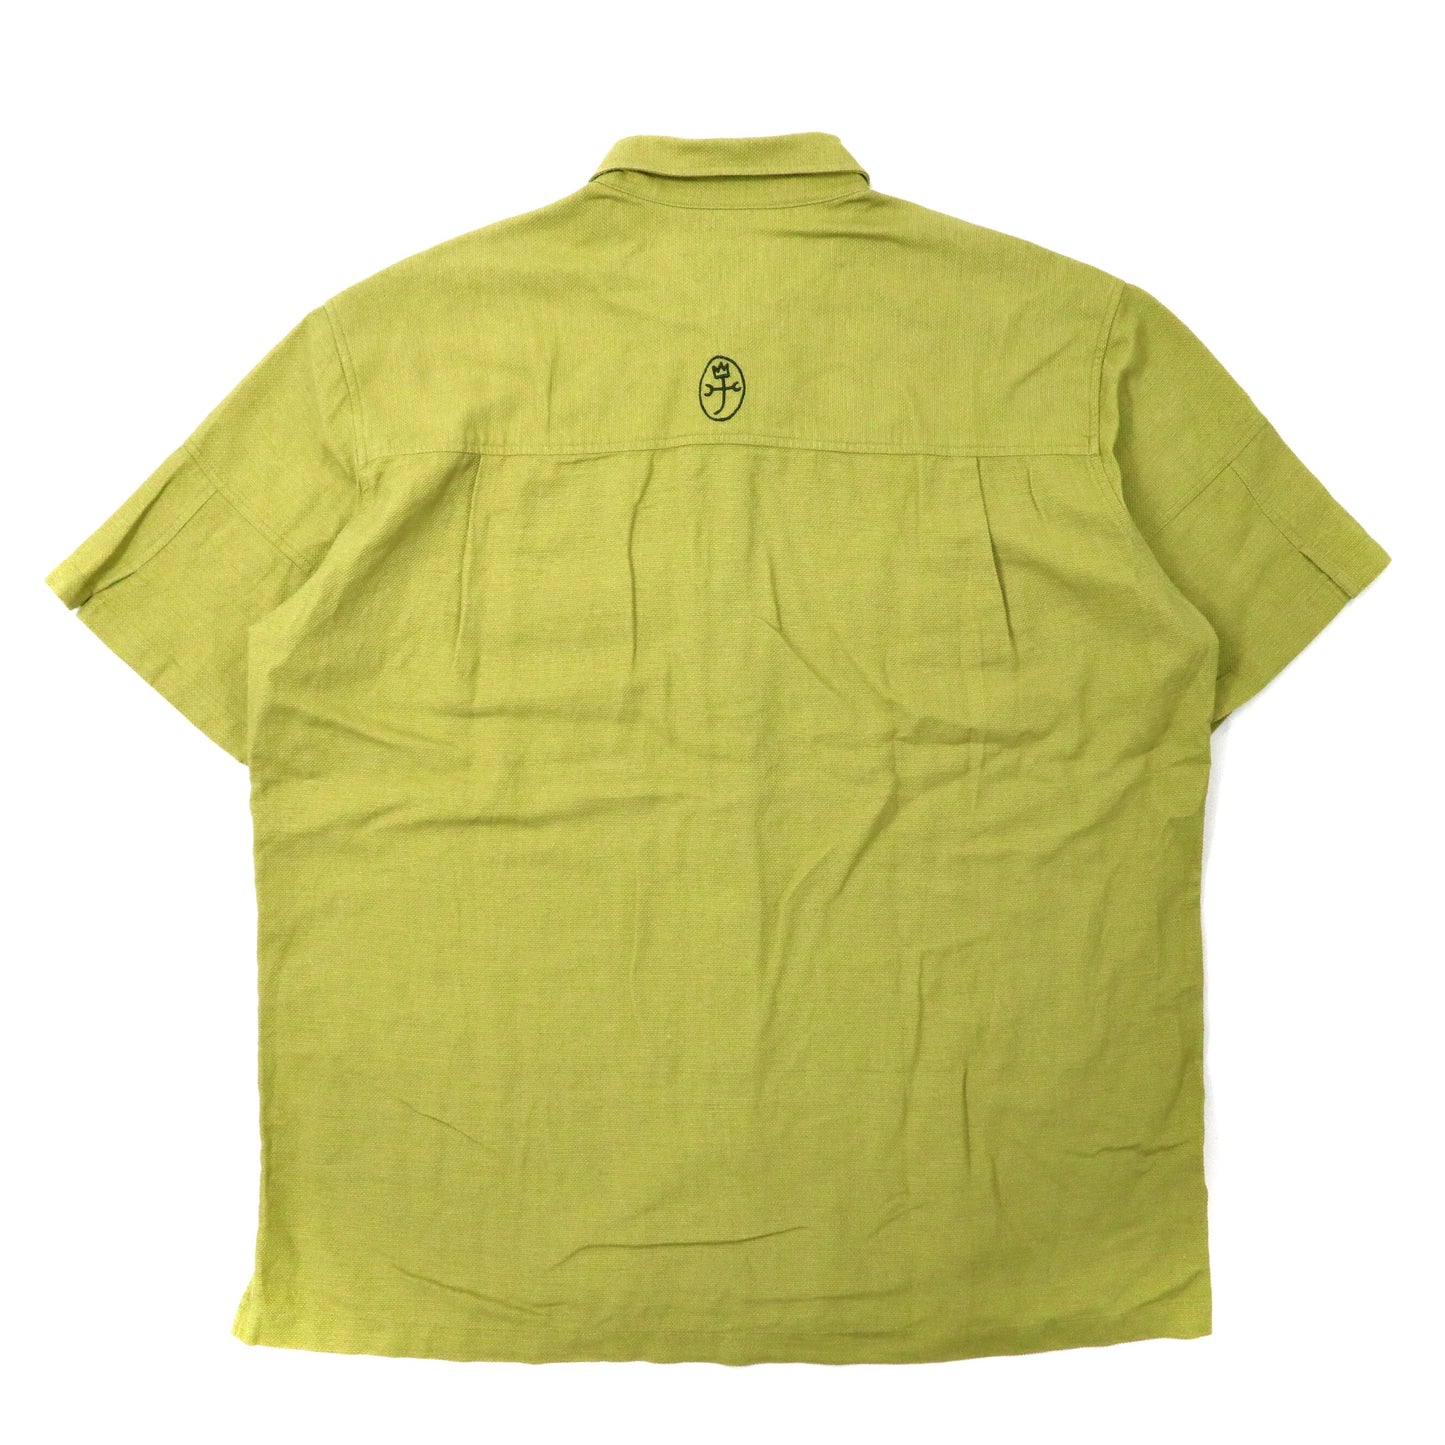 CASTELBAJAC SPORT ビッグサイズ サファリシャツ 5 グリーン リネン キャラクター刺繍 90年代